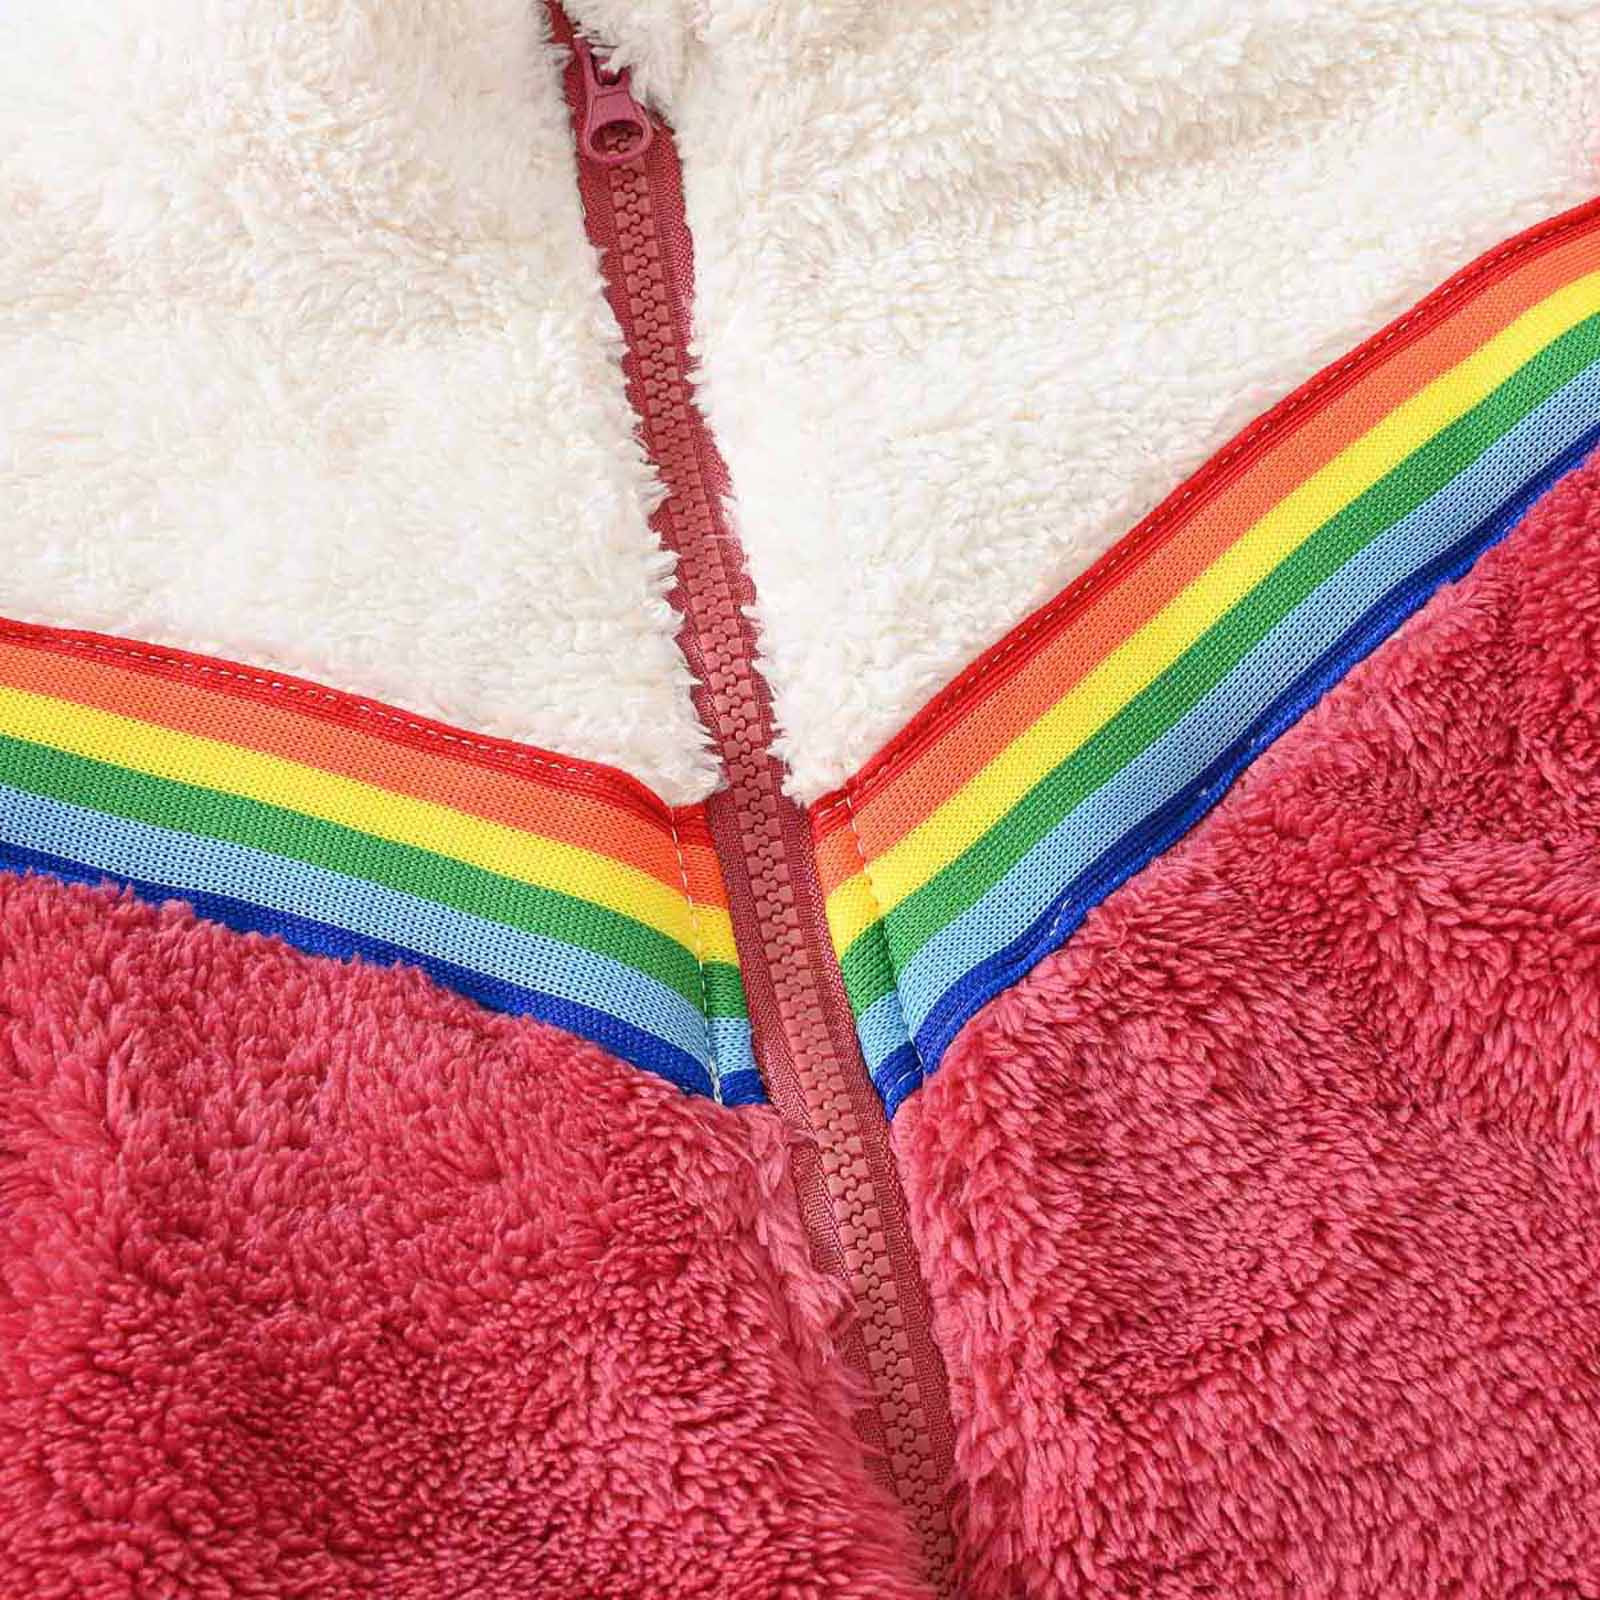 YYDGH Girls Zipper Jacket Fuzzy Sweatshirt Long Sleeve Casual Cozy Fleece Sherpa Outwear Coat Full-Zip Rainbow Jackets(Red,4-5 Years) - image 5 of 8